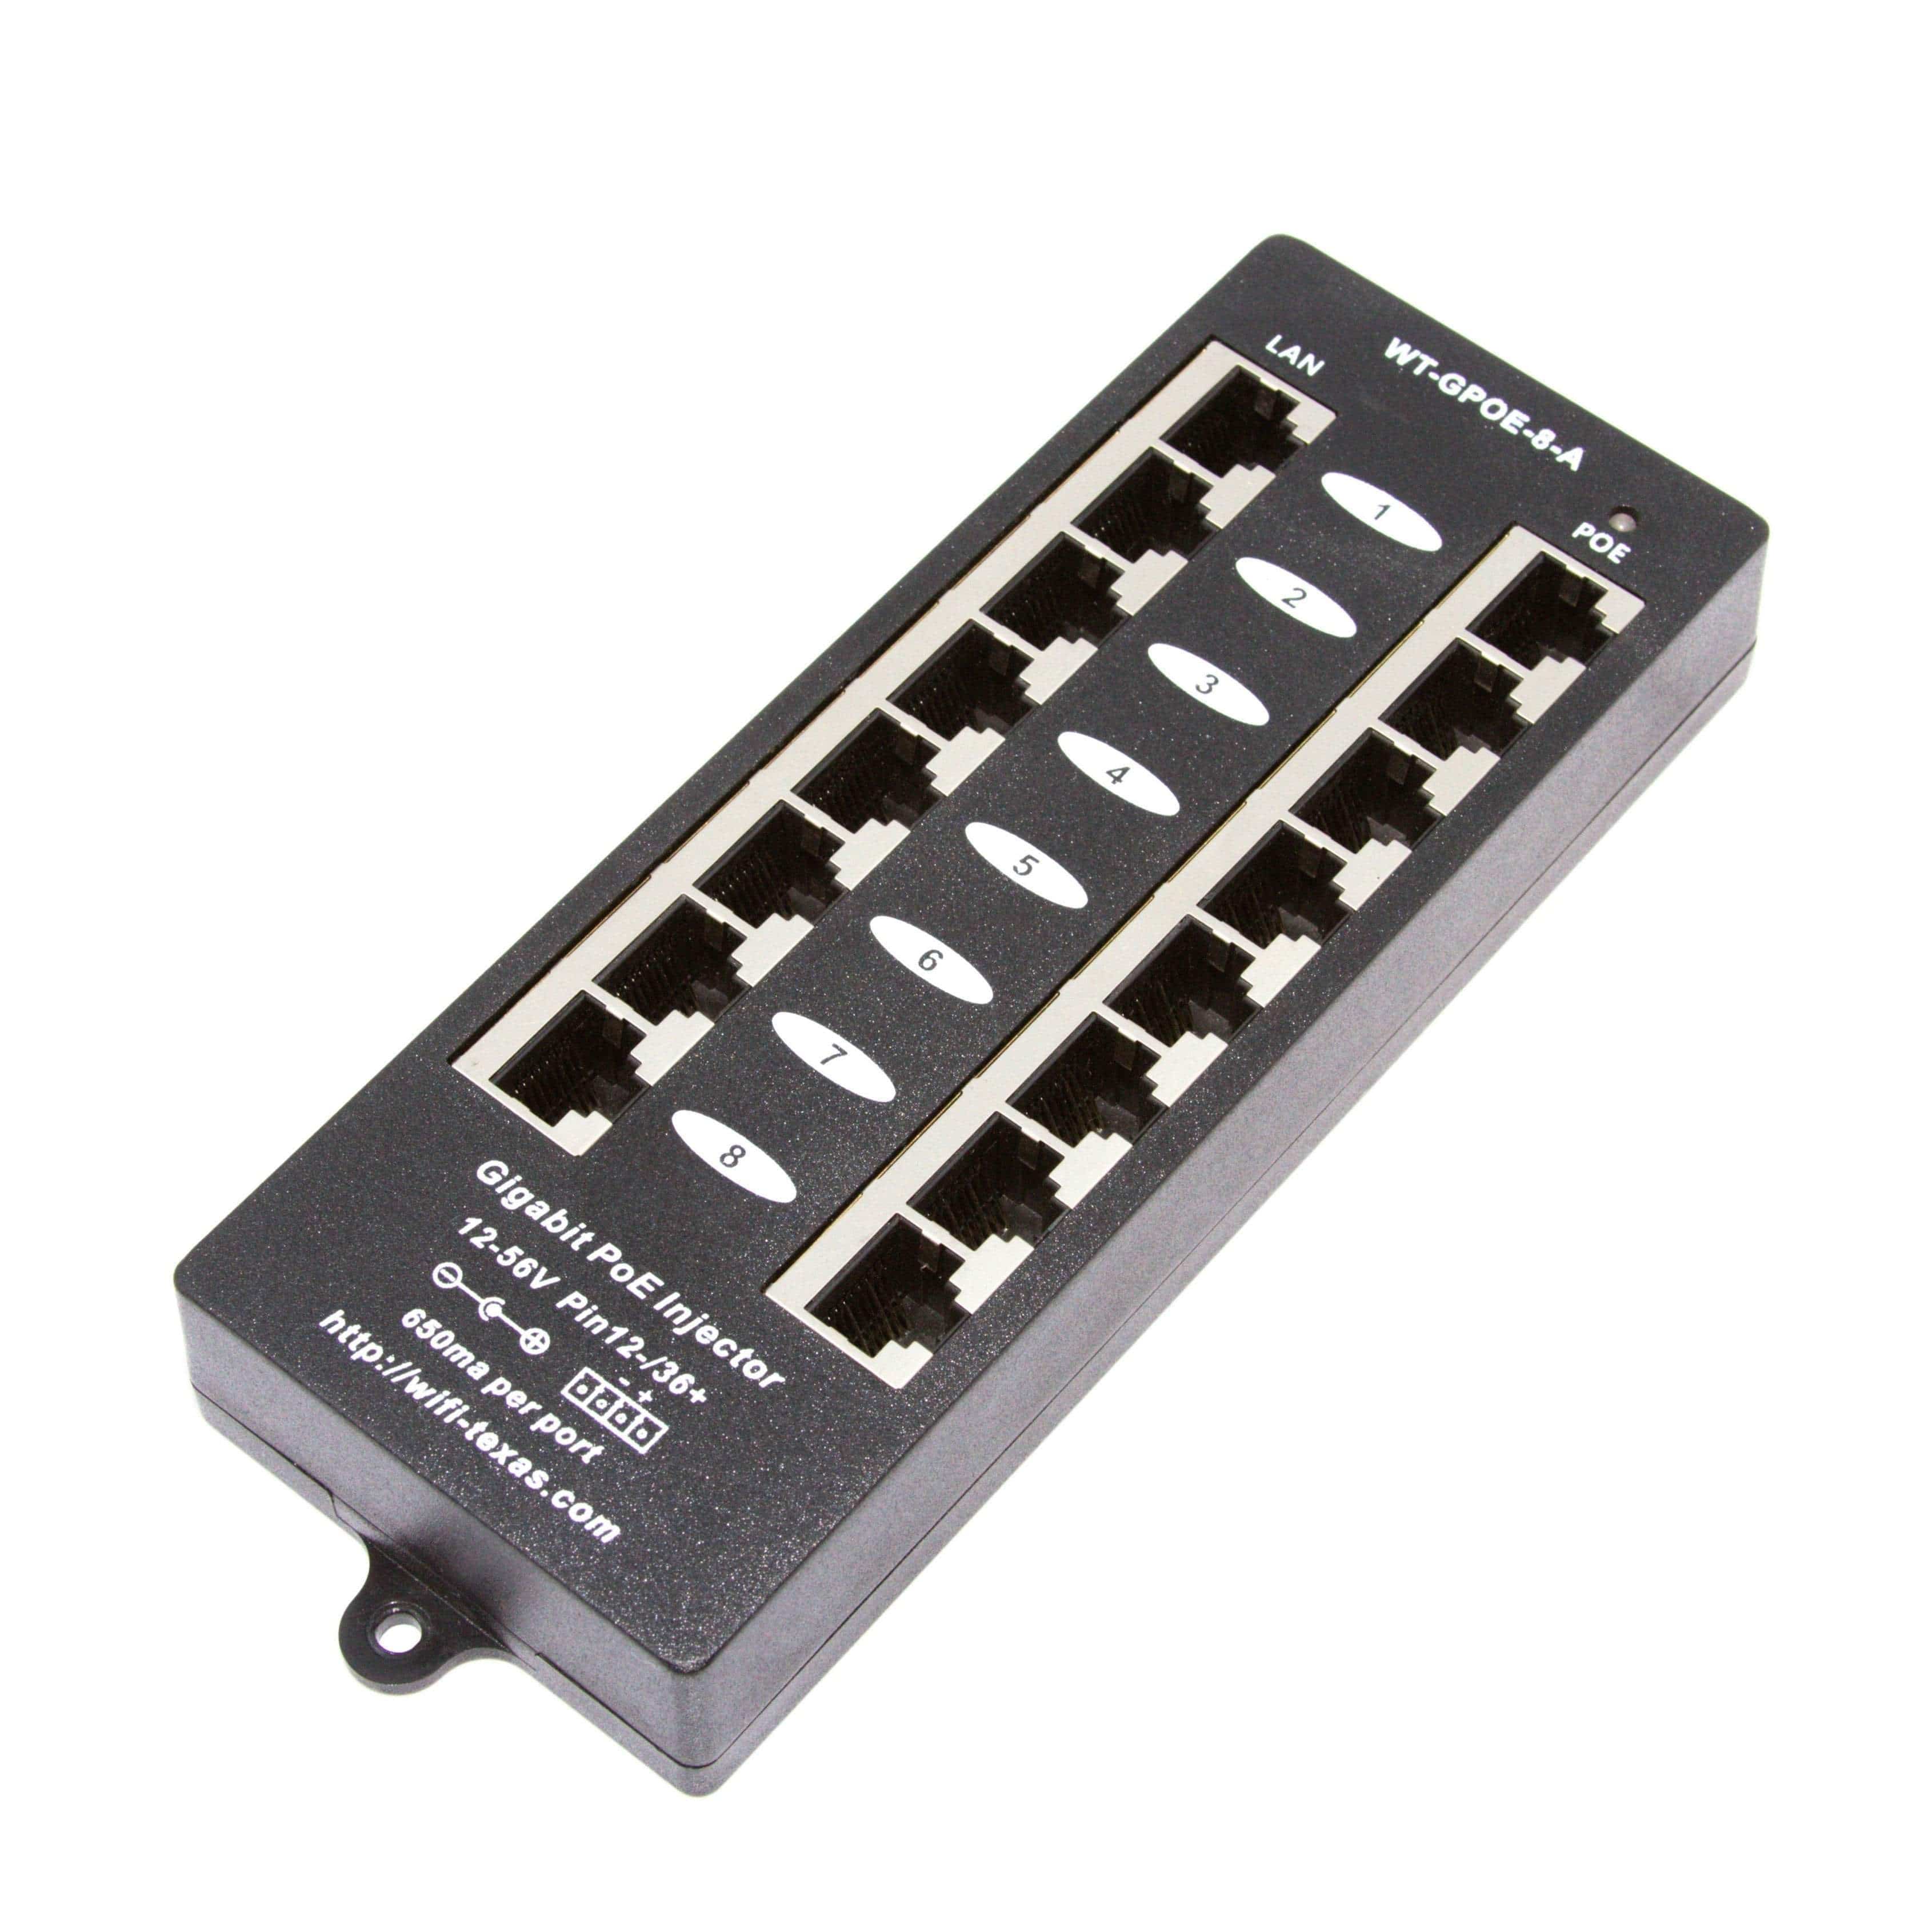 無線LAN機器 WS-GPOE-B-6-24v60w gigabit POE Port Power over Ethernet  Injector with 24 volt 60 watt supply 価格比較